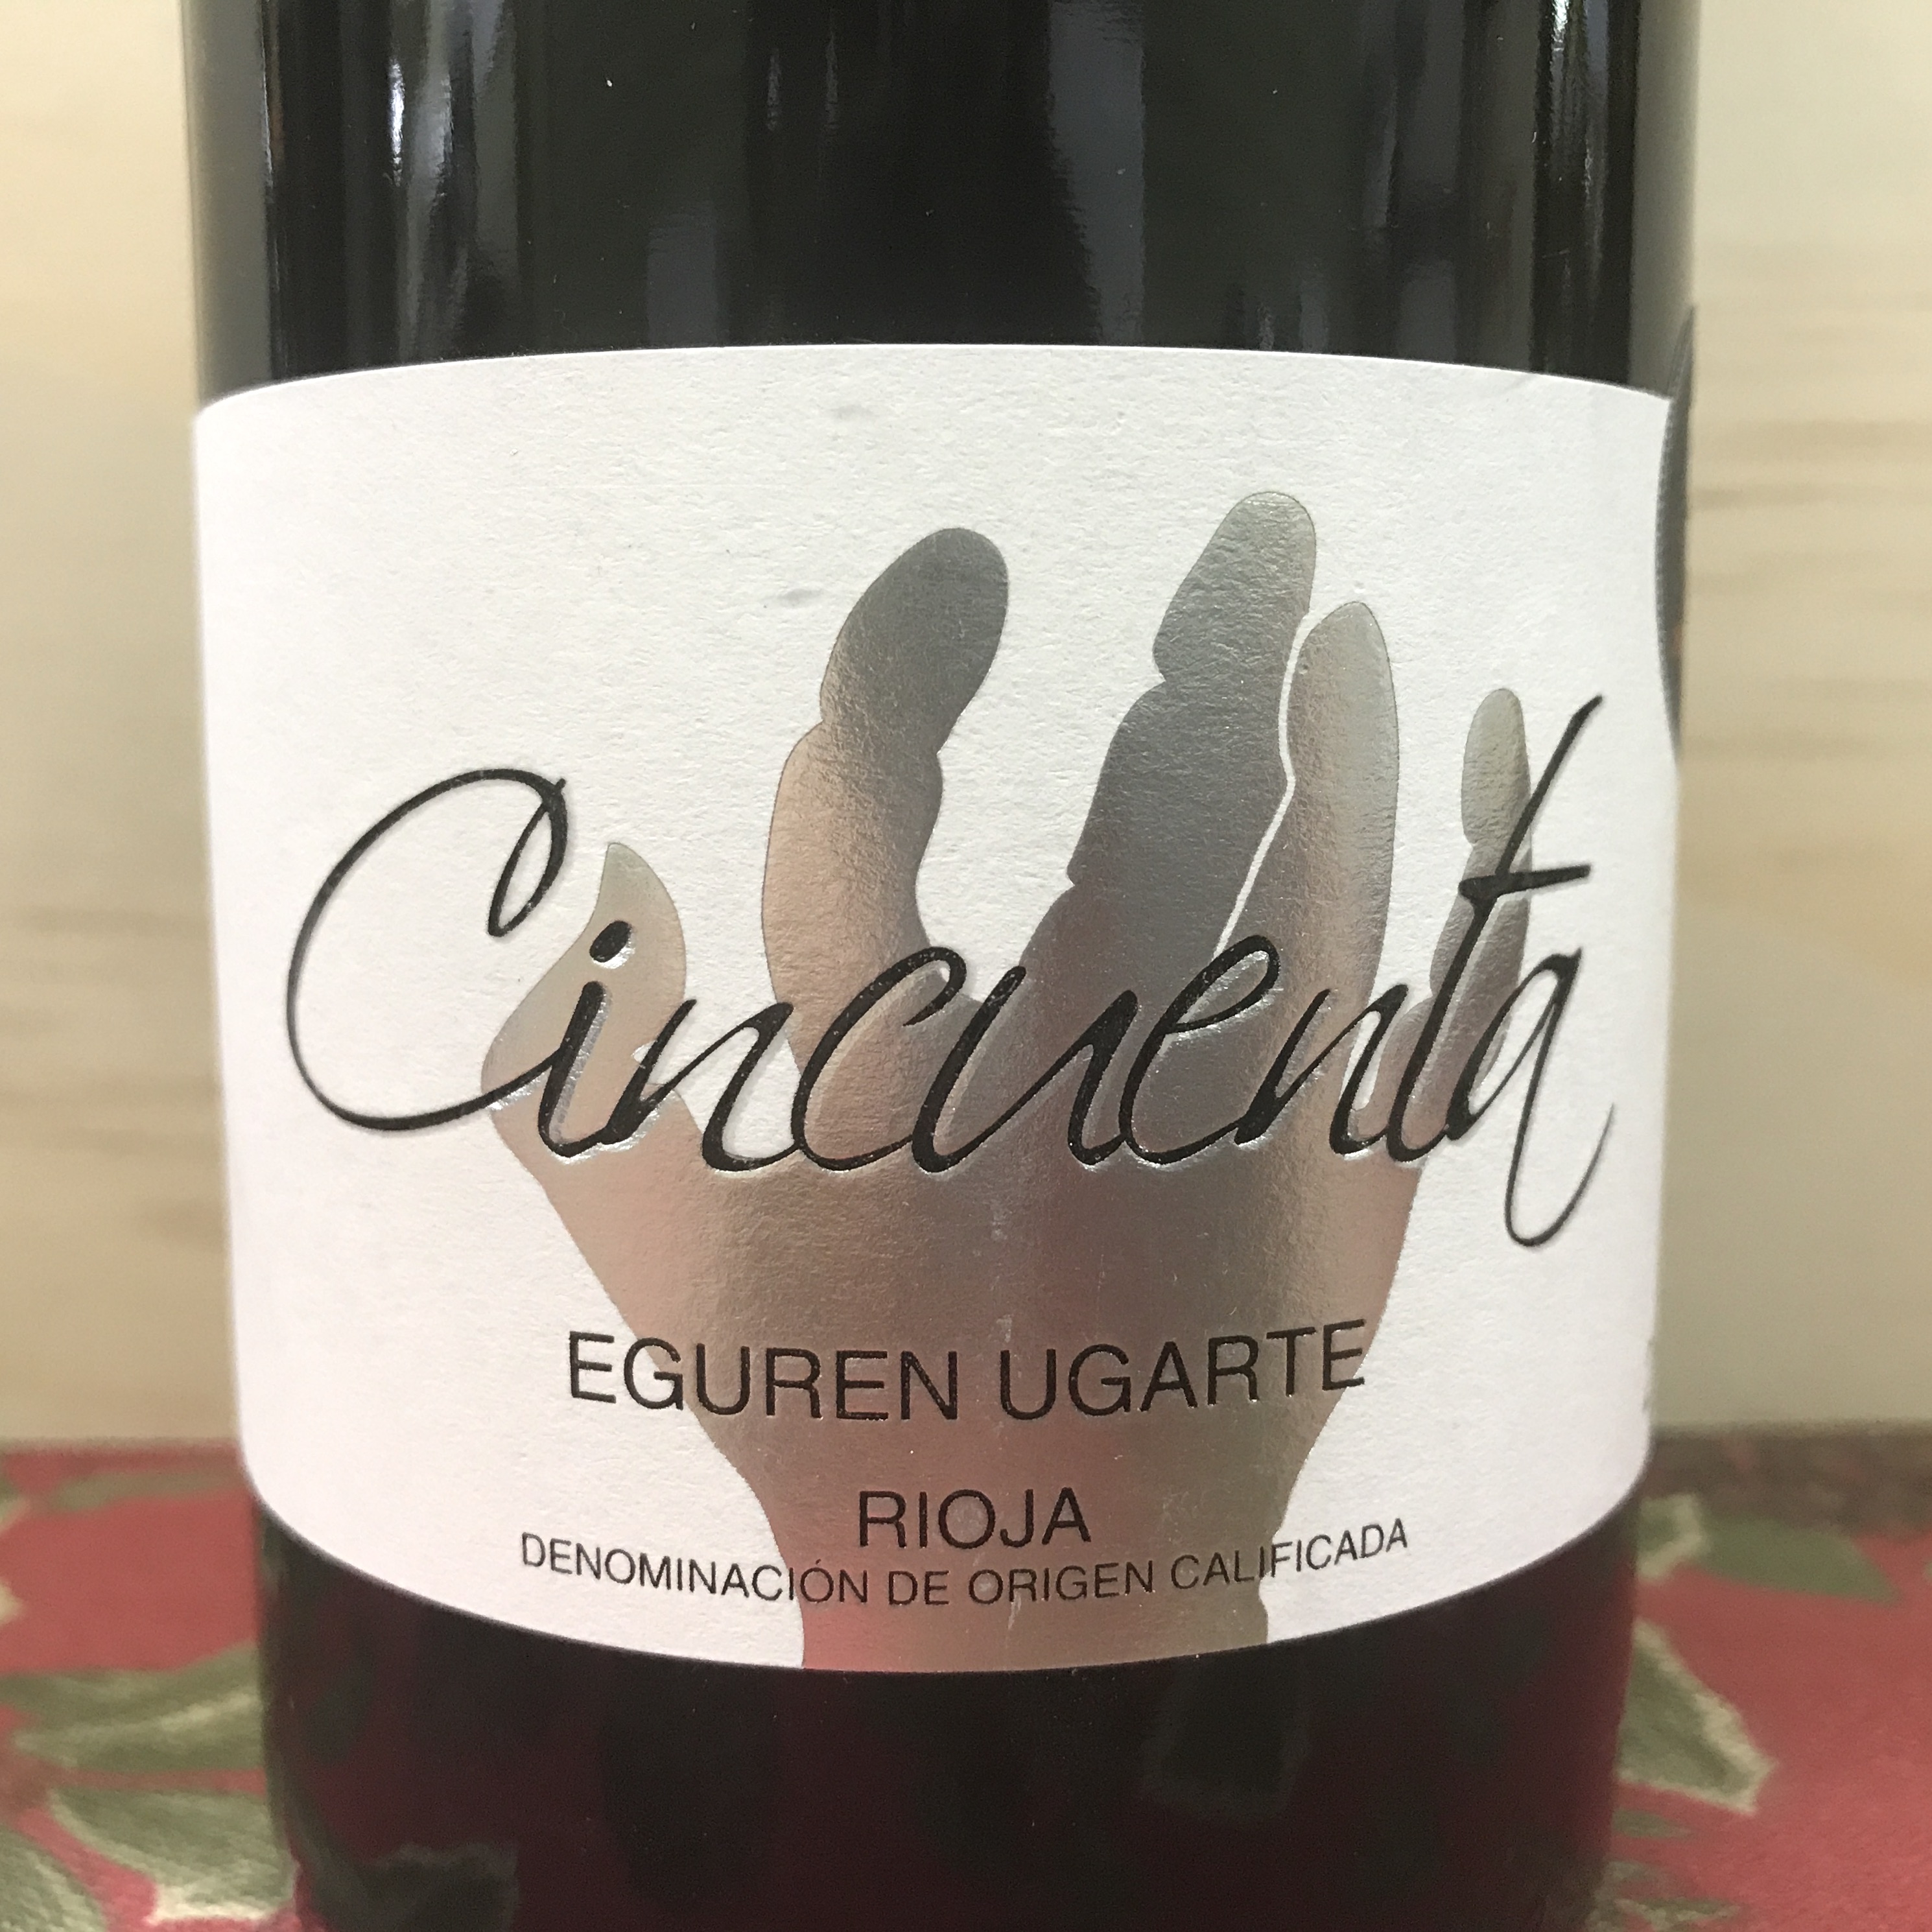 Eguren Ugarte Cincuenta Rioja 2016